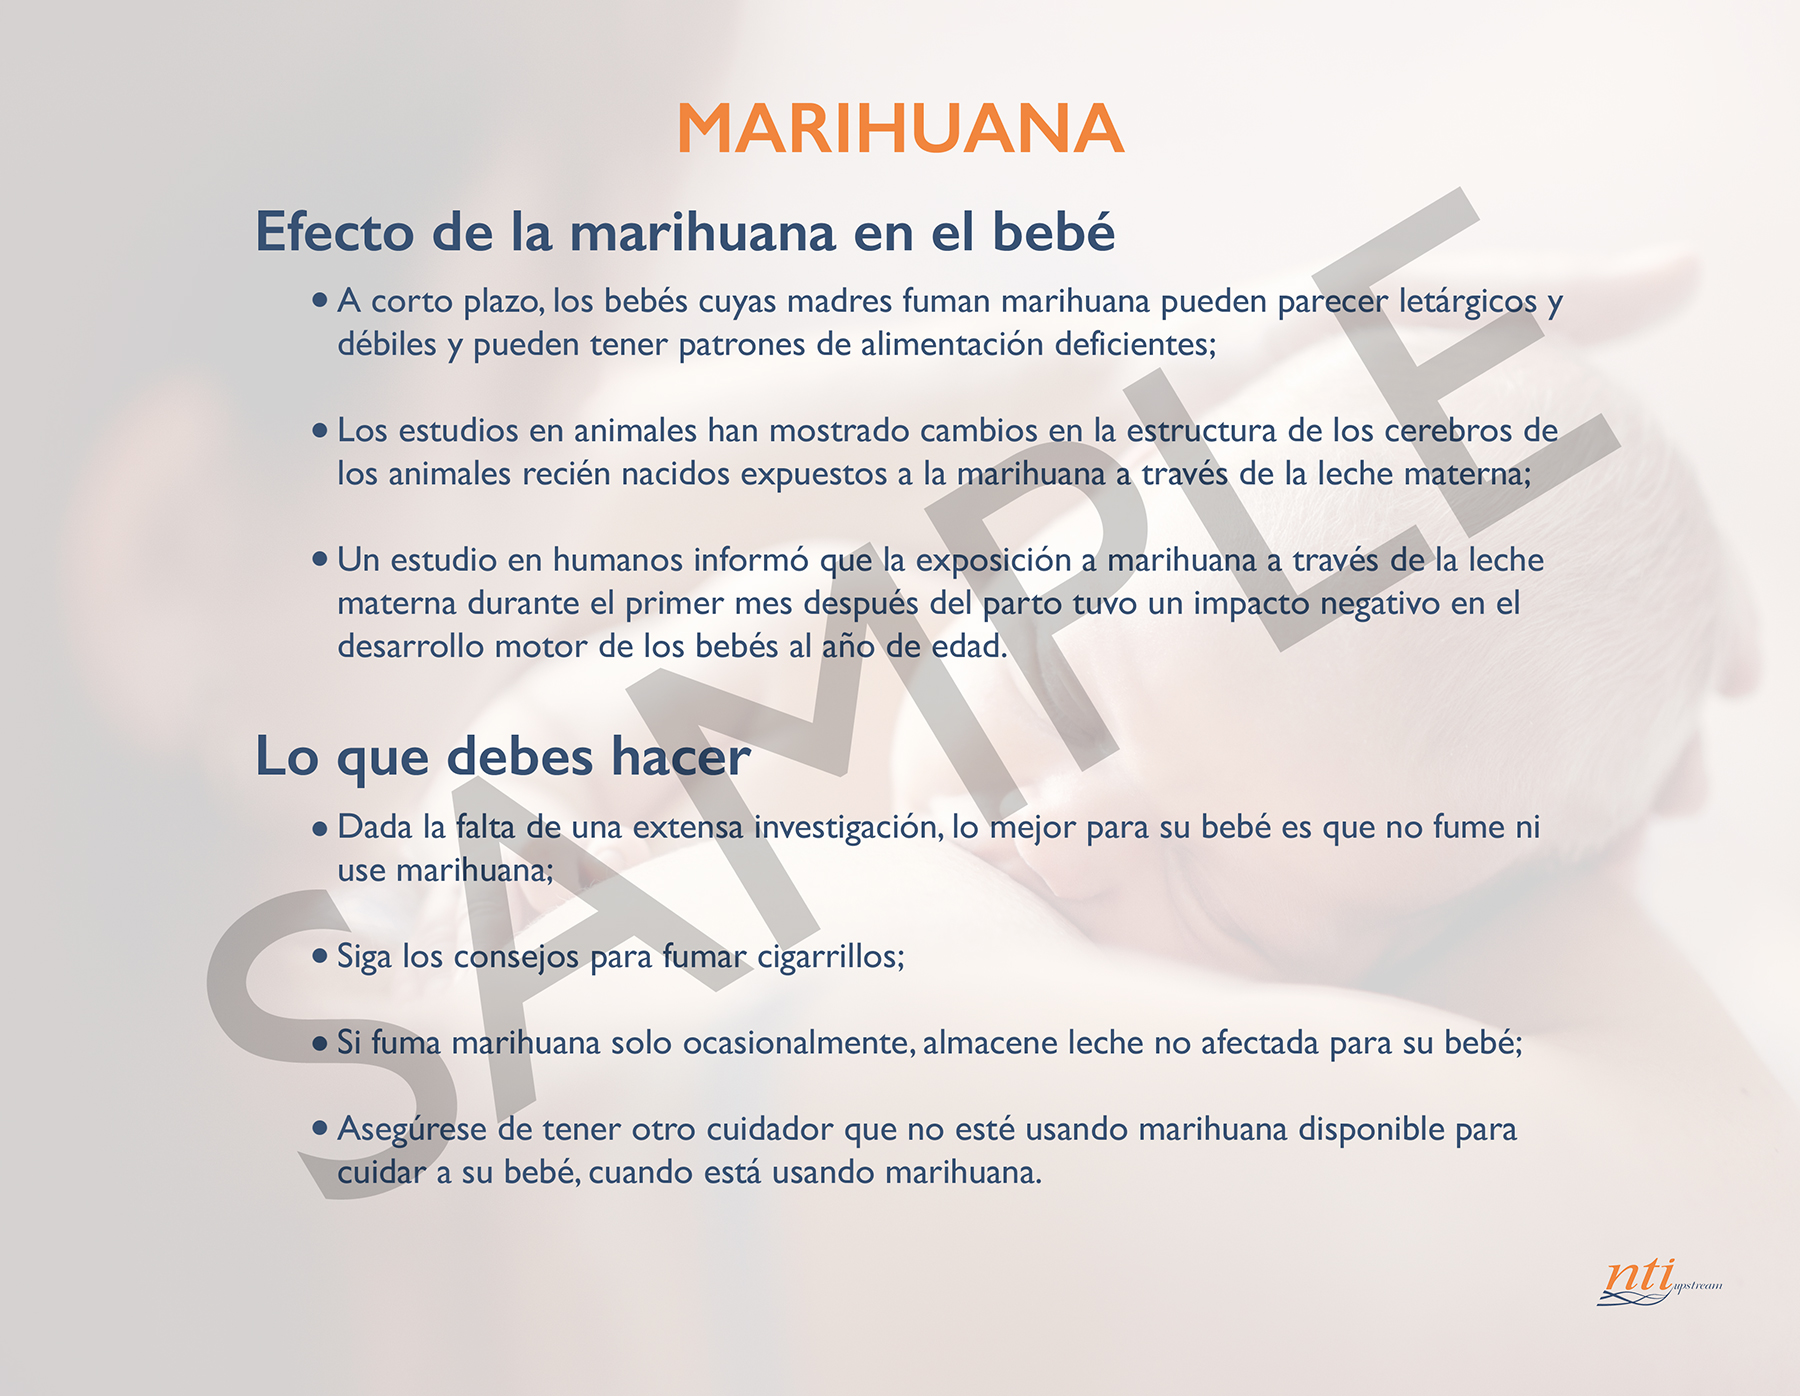 Marijuana_Spanish_page2_bleeds_SAMPLE.jpg